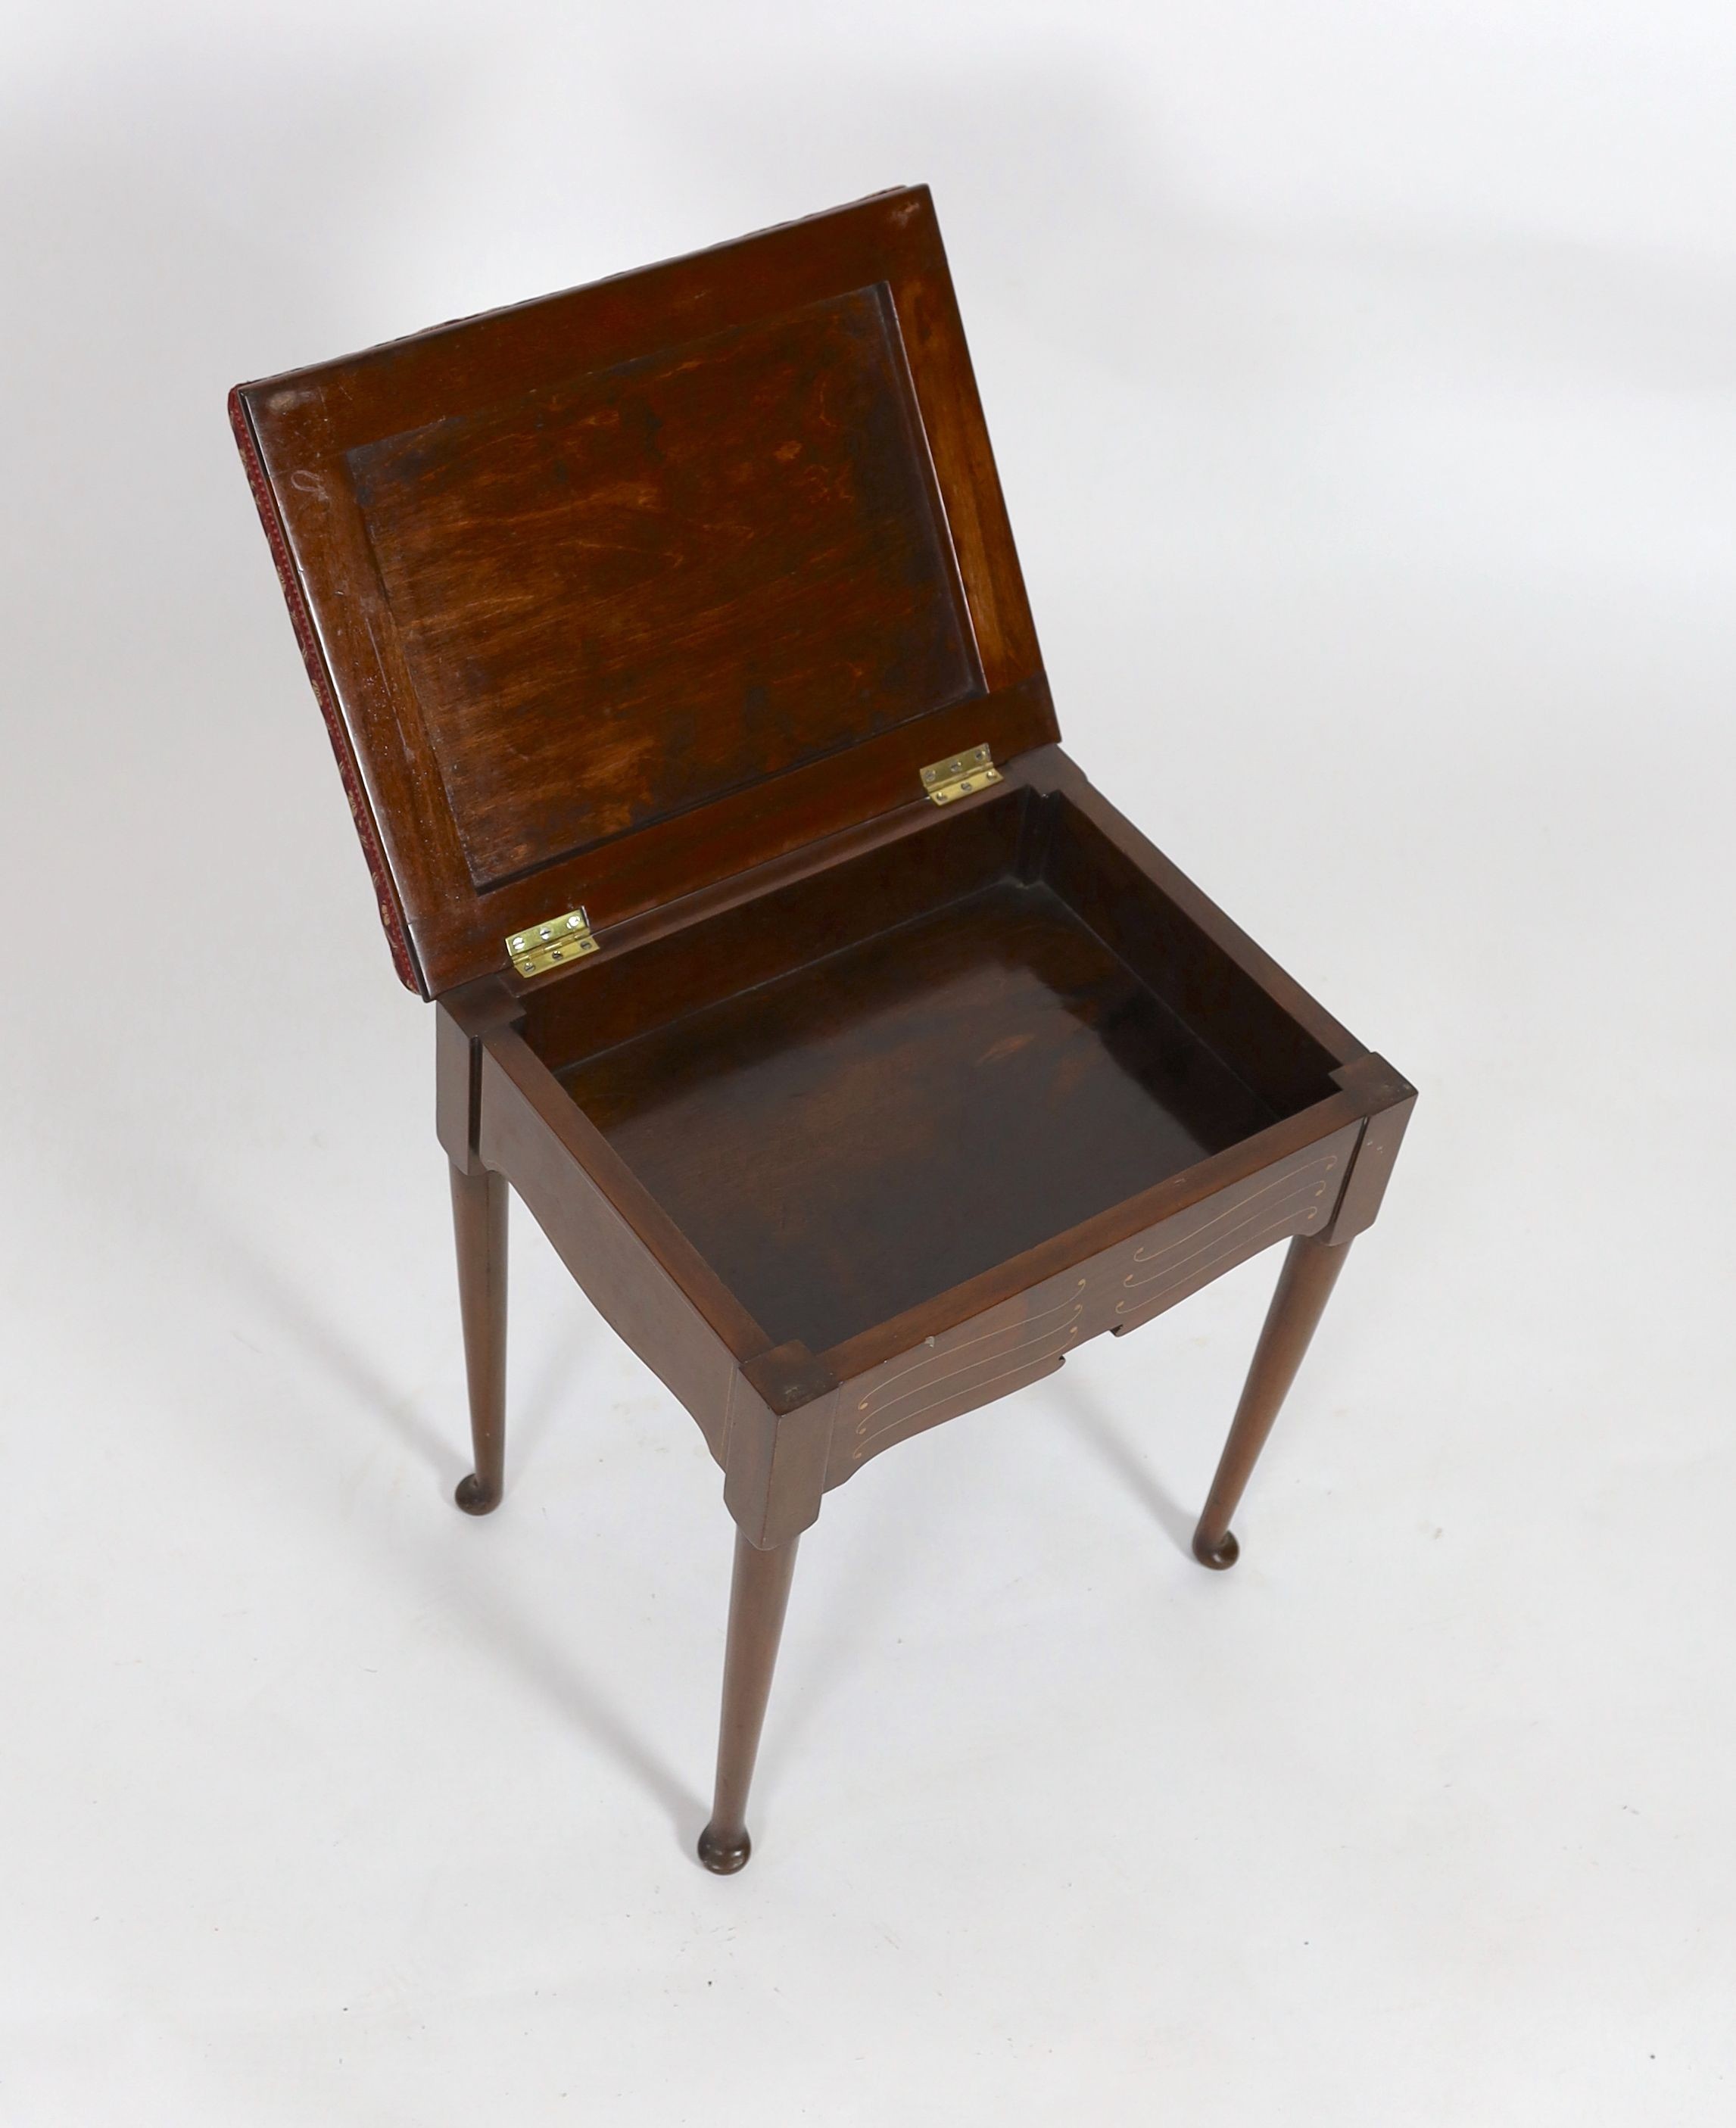 An Edwardian inlaid mahogany upholstered box stool piano stool, width 45cm depth 36cm height 53cm